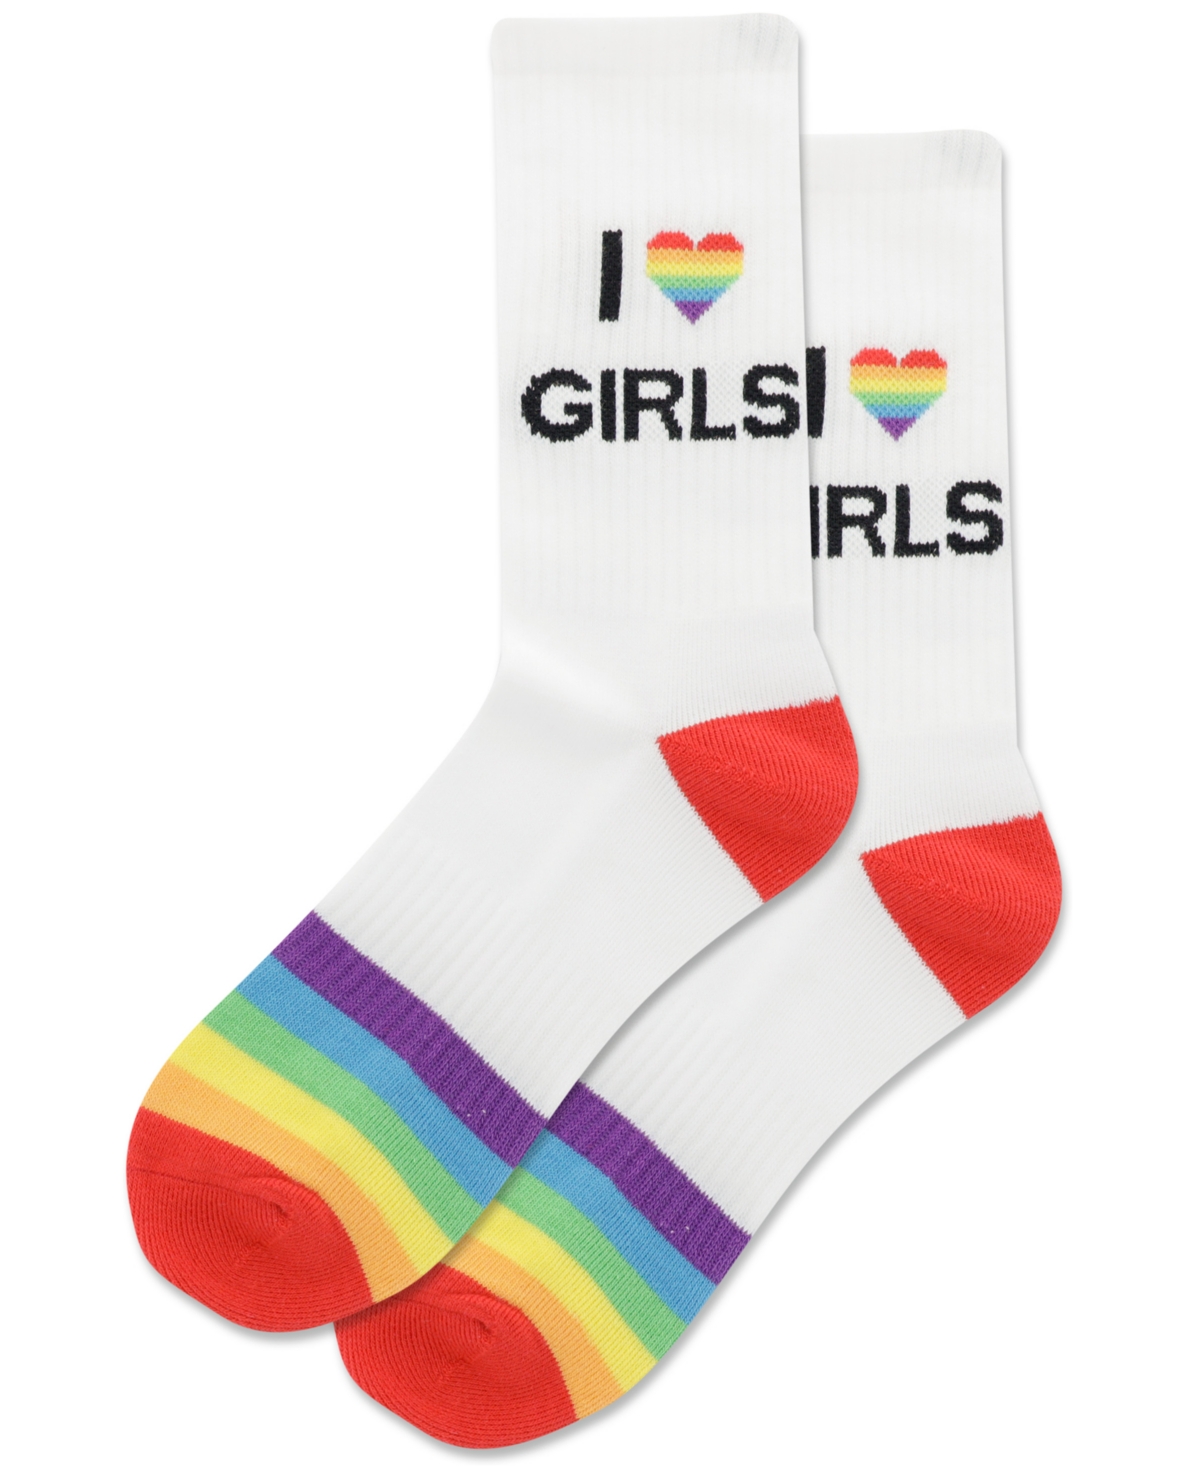 Hot Sox Rainbow Crew Socks